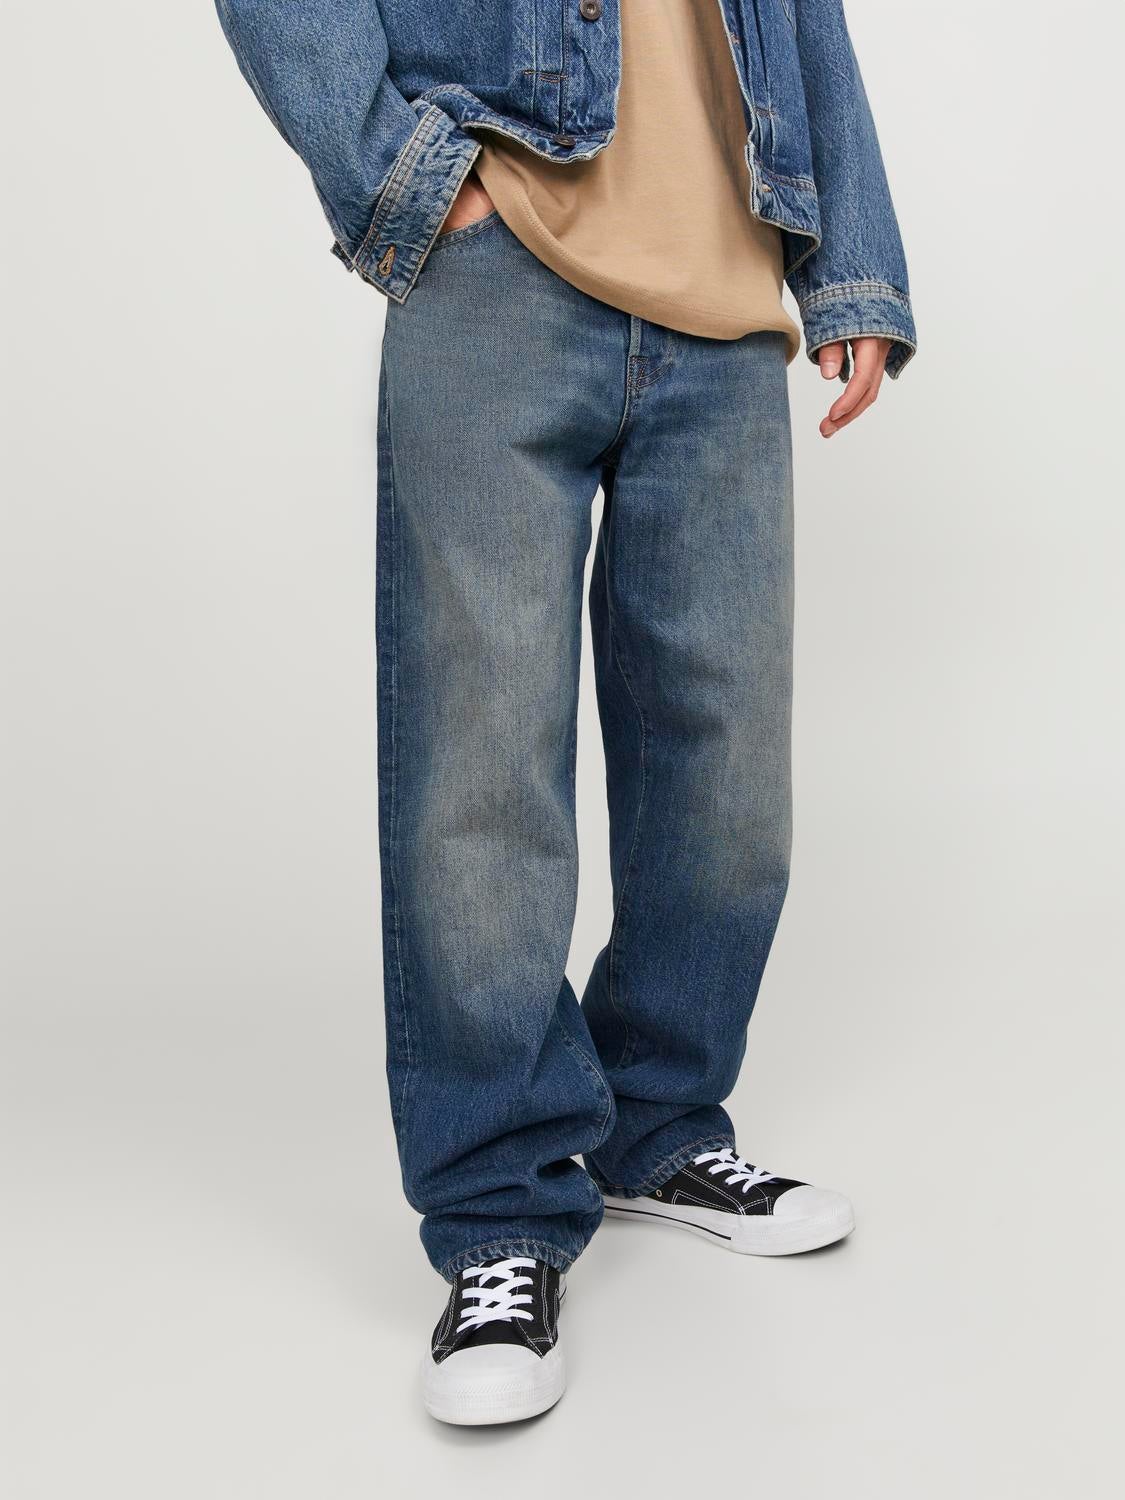 Astro Loose Baggy Jeans - Seventeen blue - Weekday | Streetwear men  outfits, Loose jeans outfit, Street fashion men streetwear